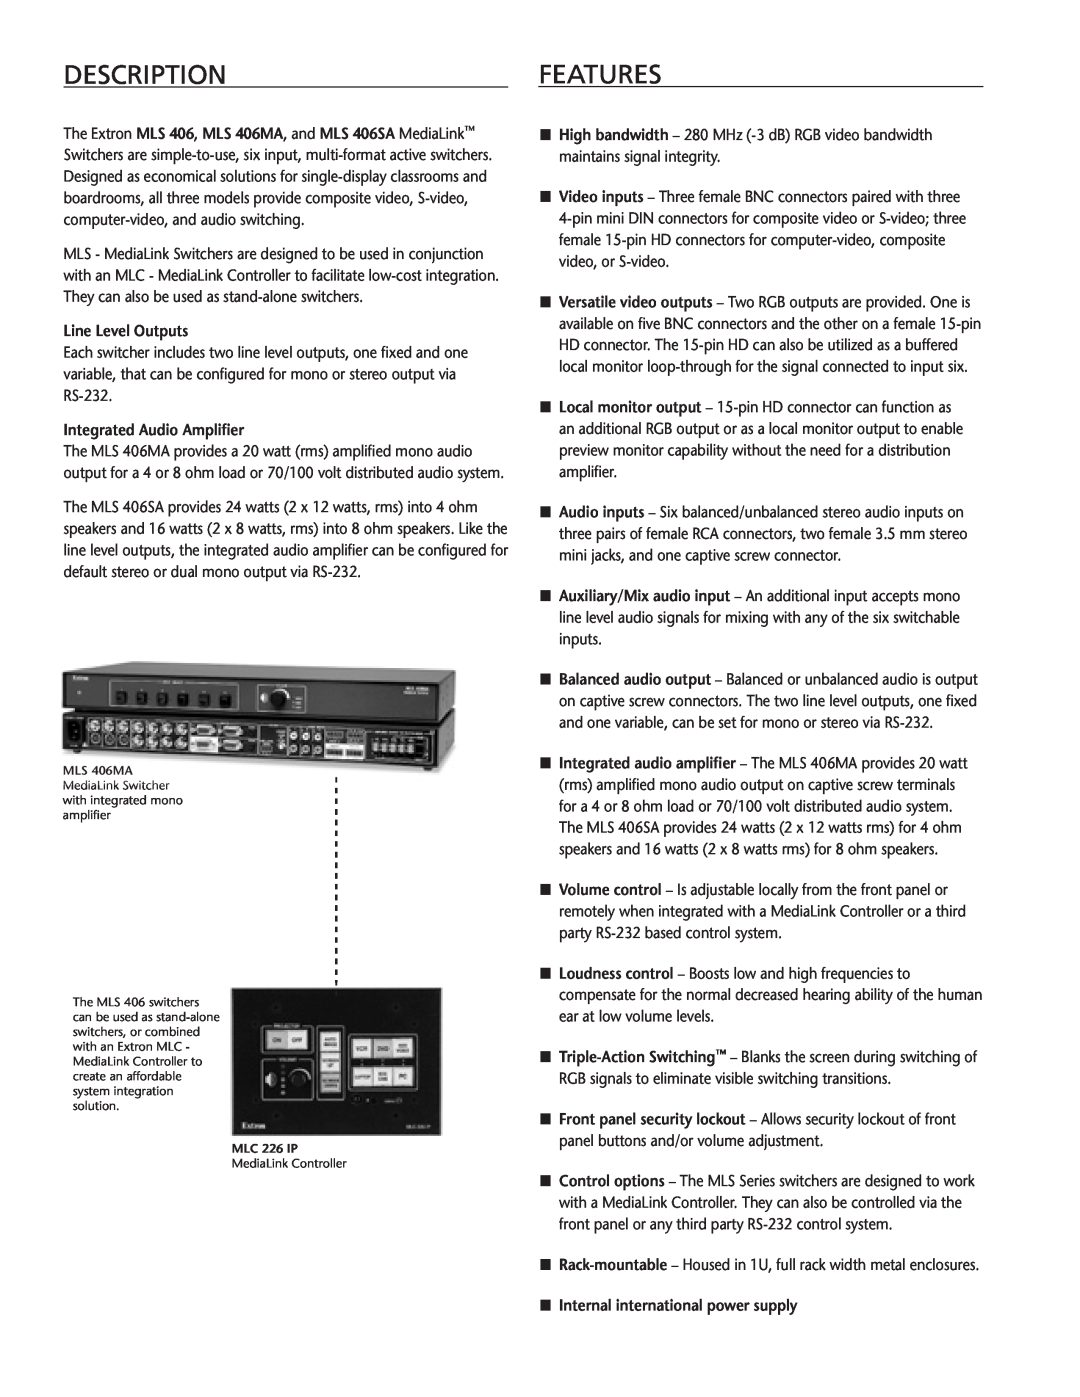 Extron electronic MLS 406 Series manual DESCRIPTIONFeatures, Line Level Outputs, Integrated Audio Amplifier 